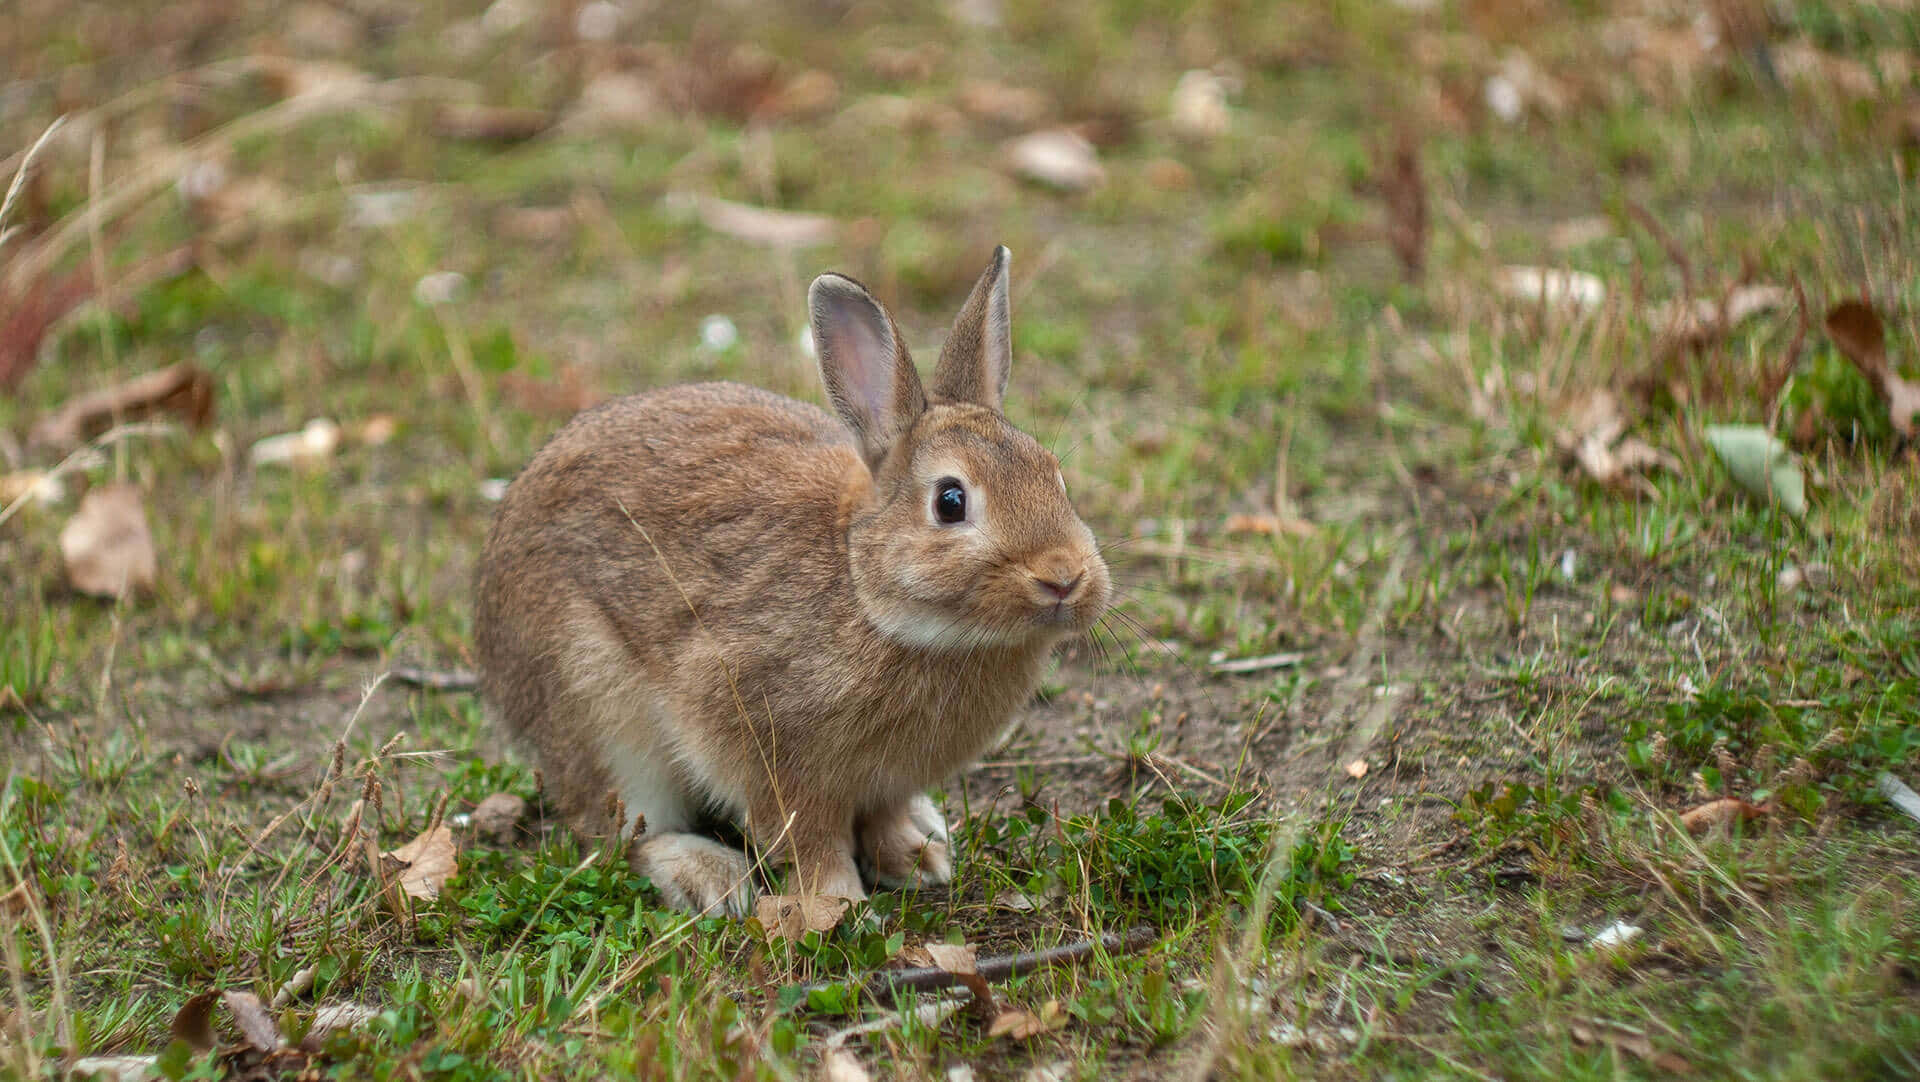 Alert Cottontail Rabbitin Grassy Field.jpg Wallpaper